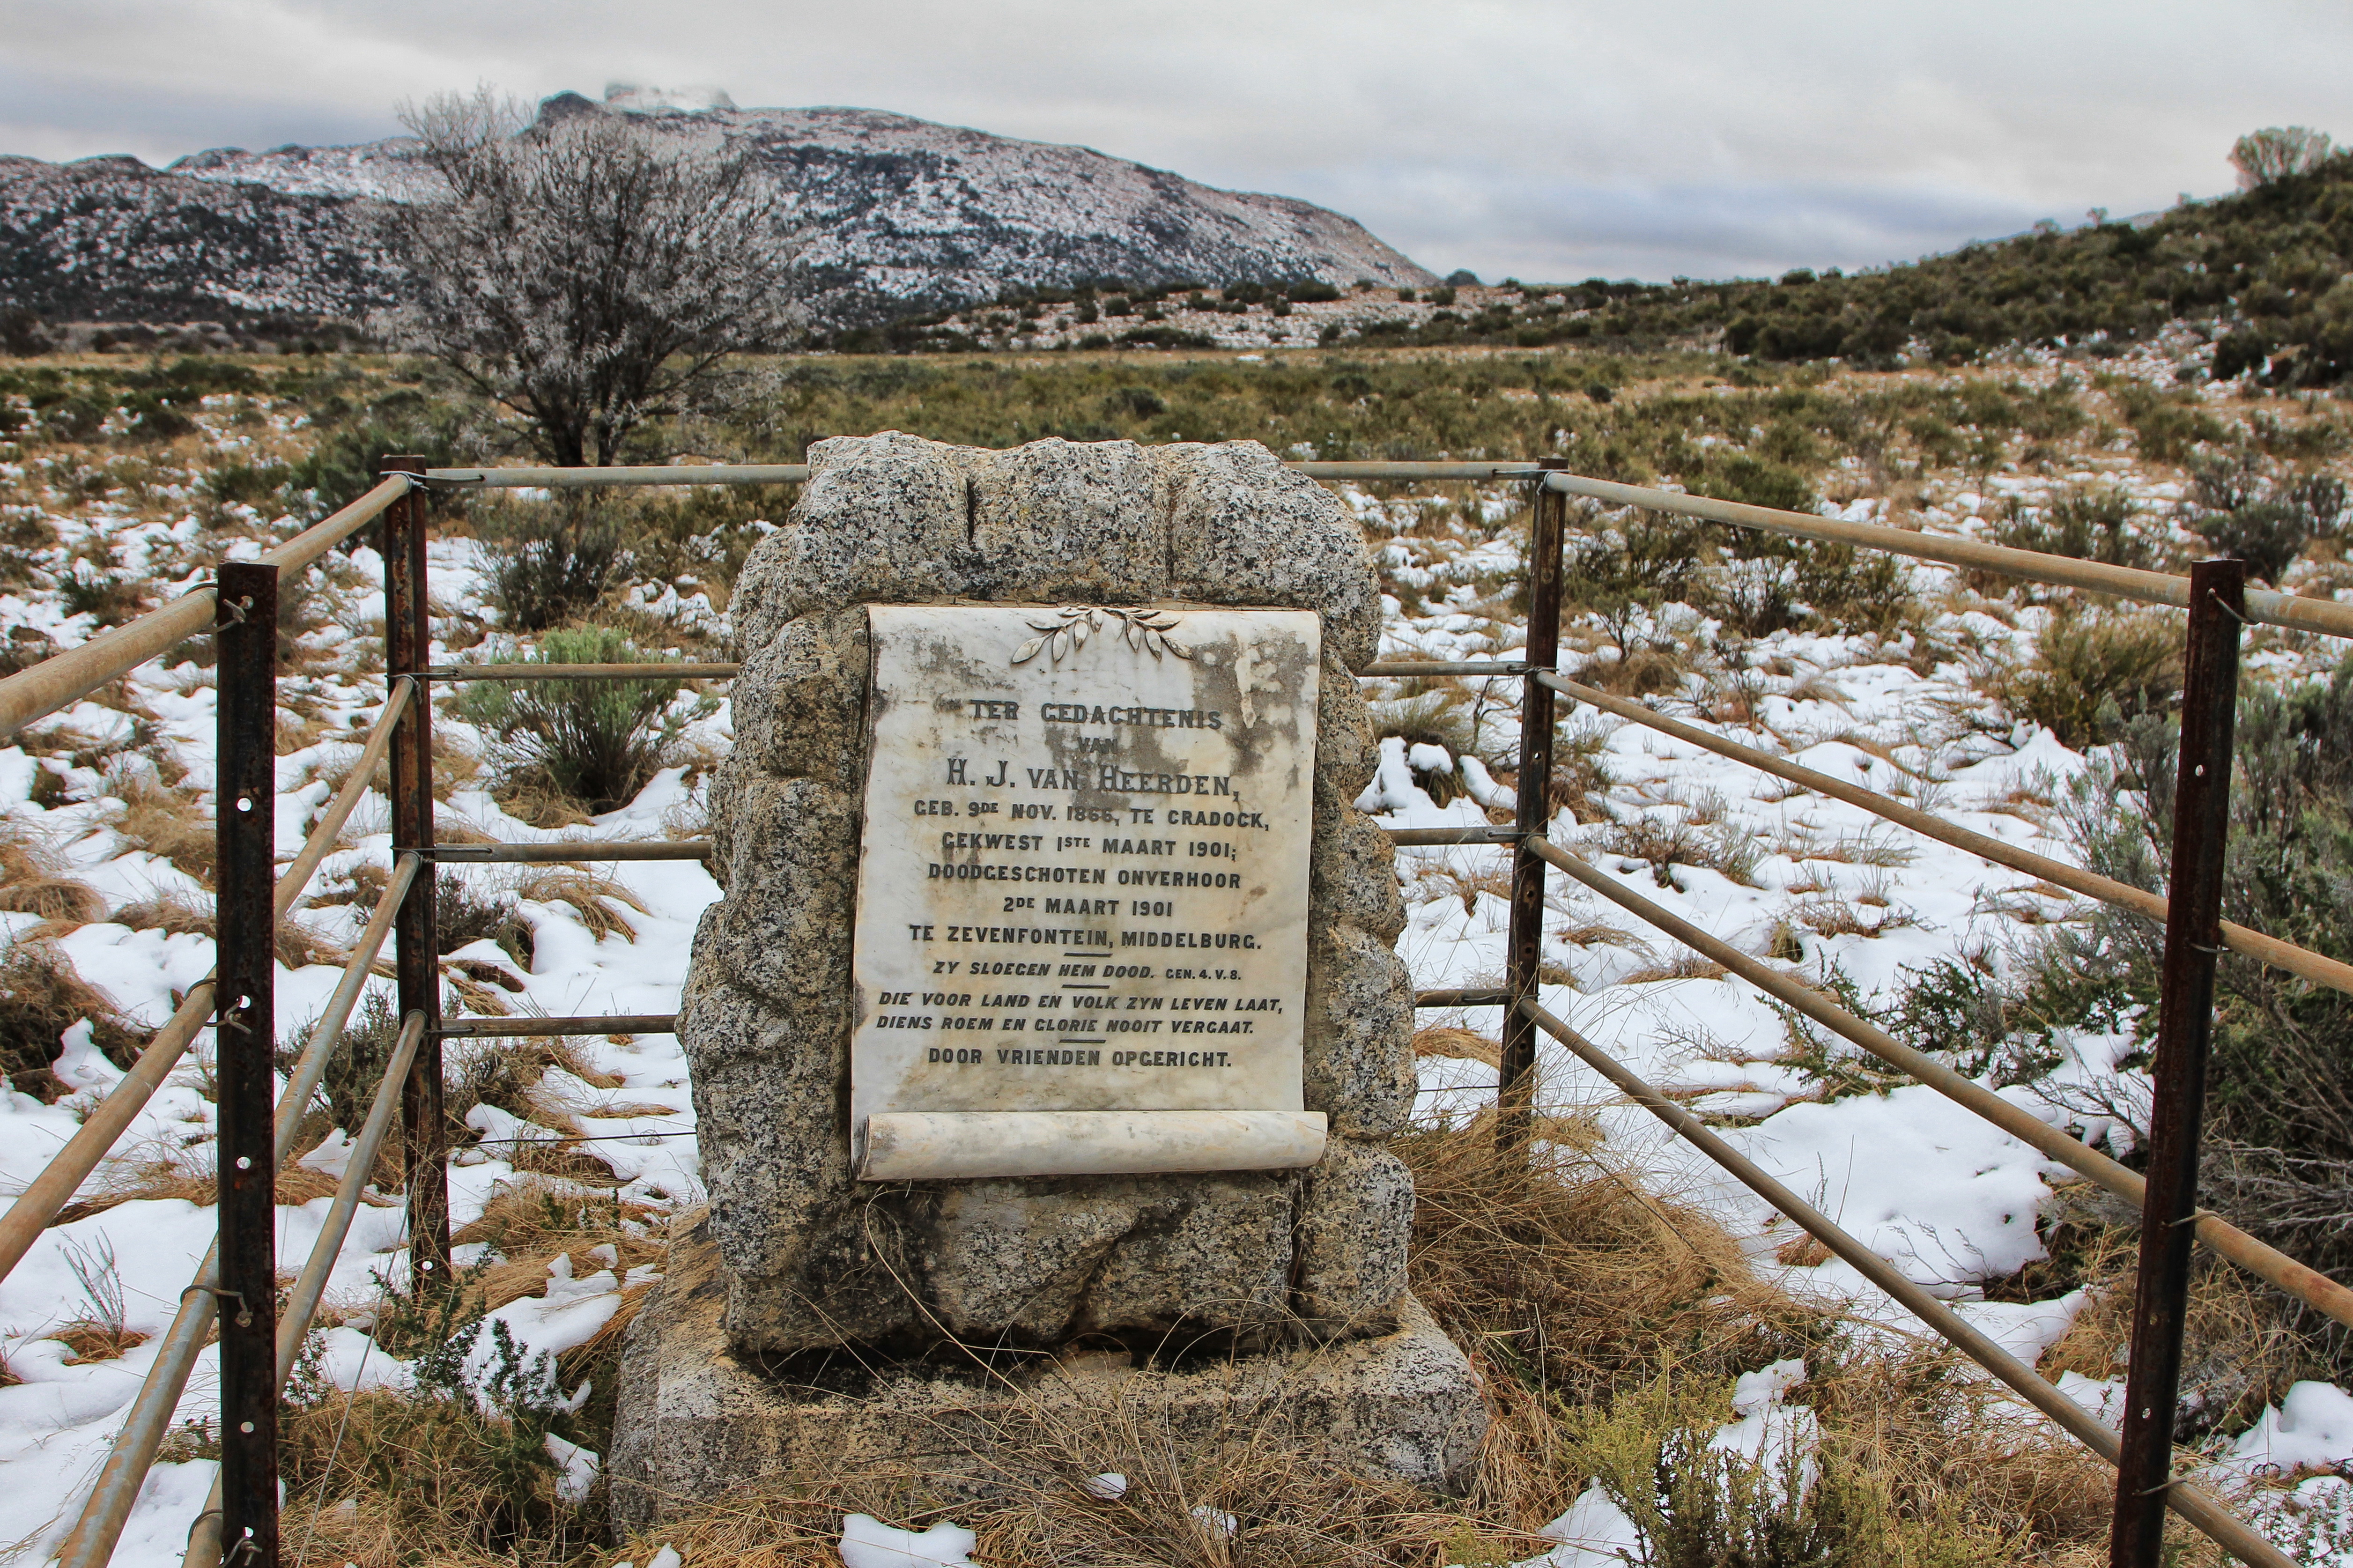 The grave of Hendrik van Heerden, executed on his own farm in the Karoo Heartland. Image: Chris Marais